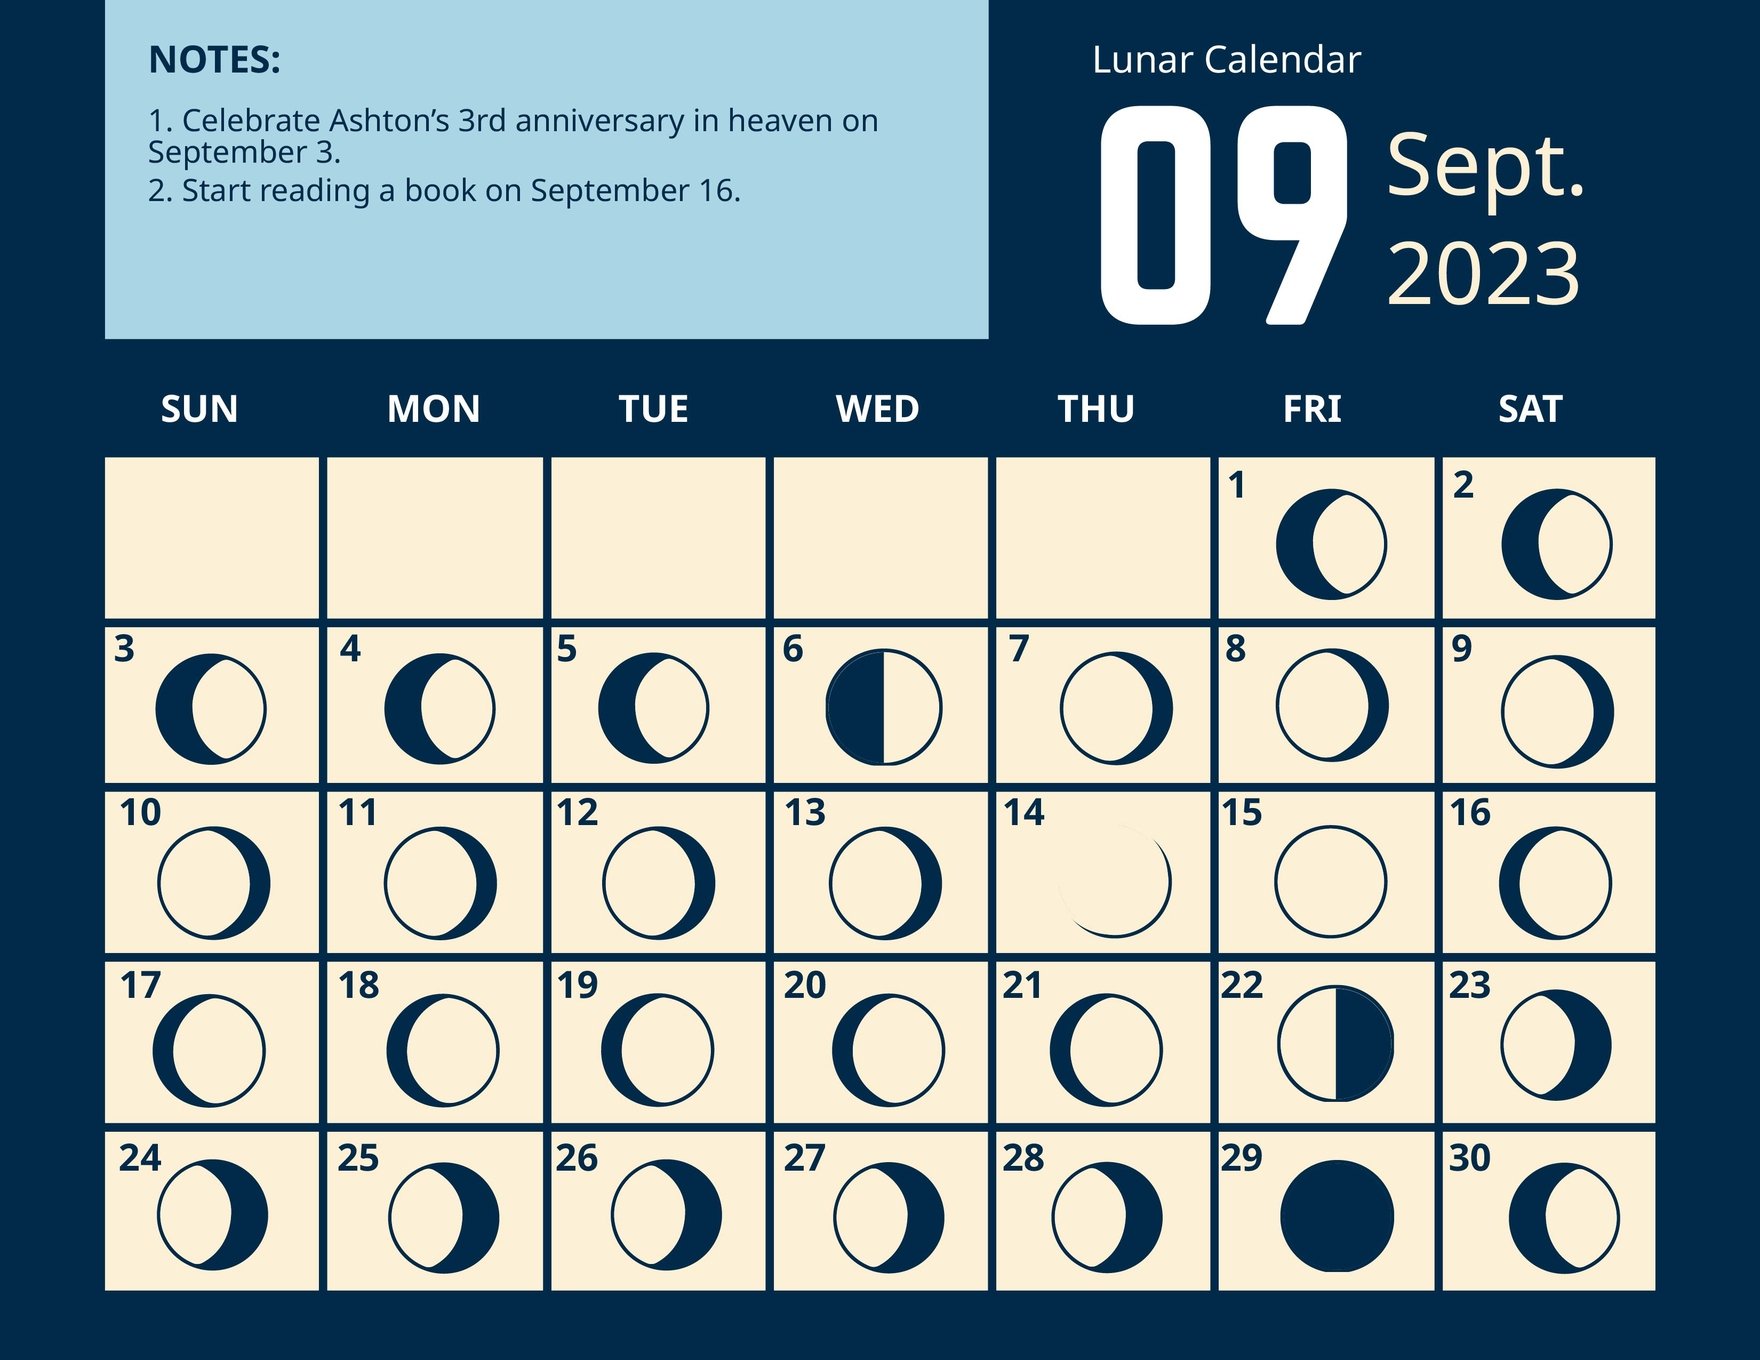 Lunar Calendar September 2023